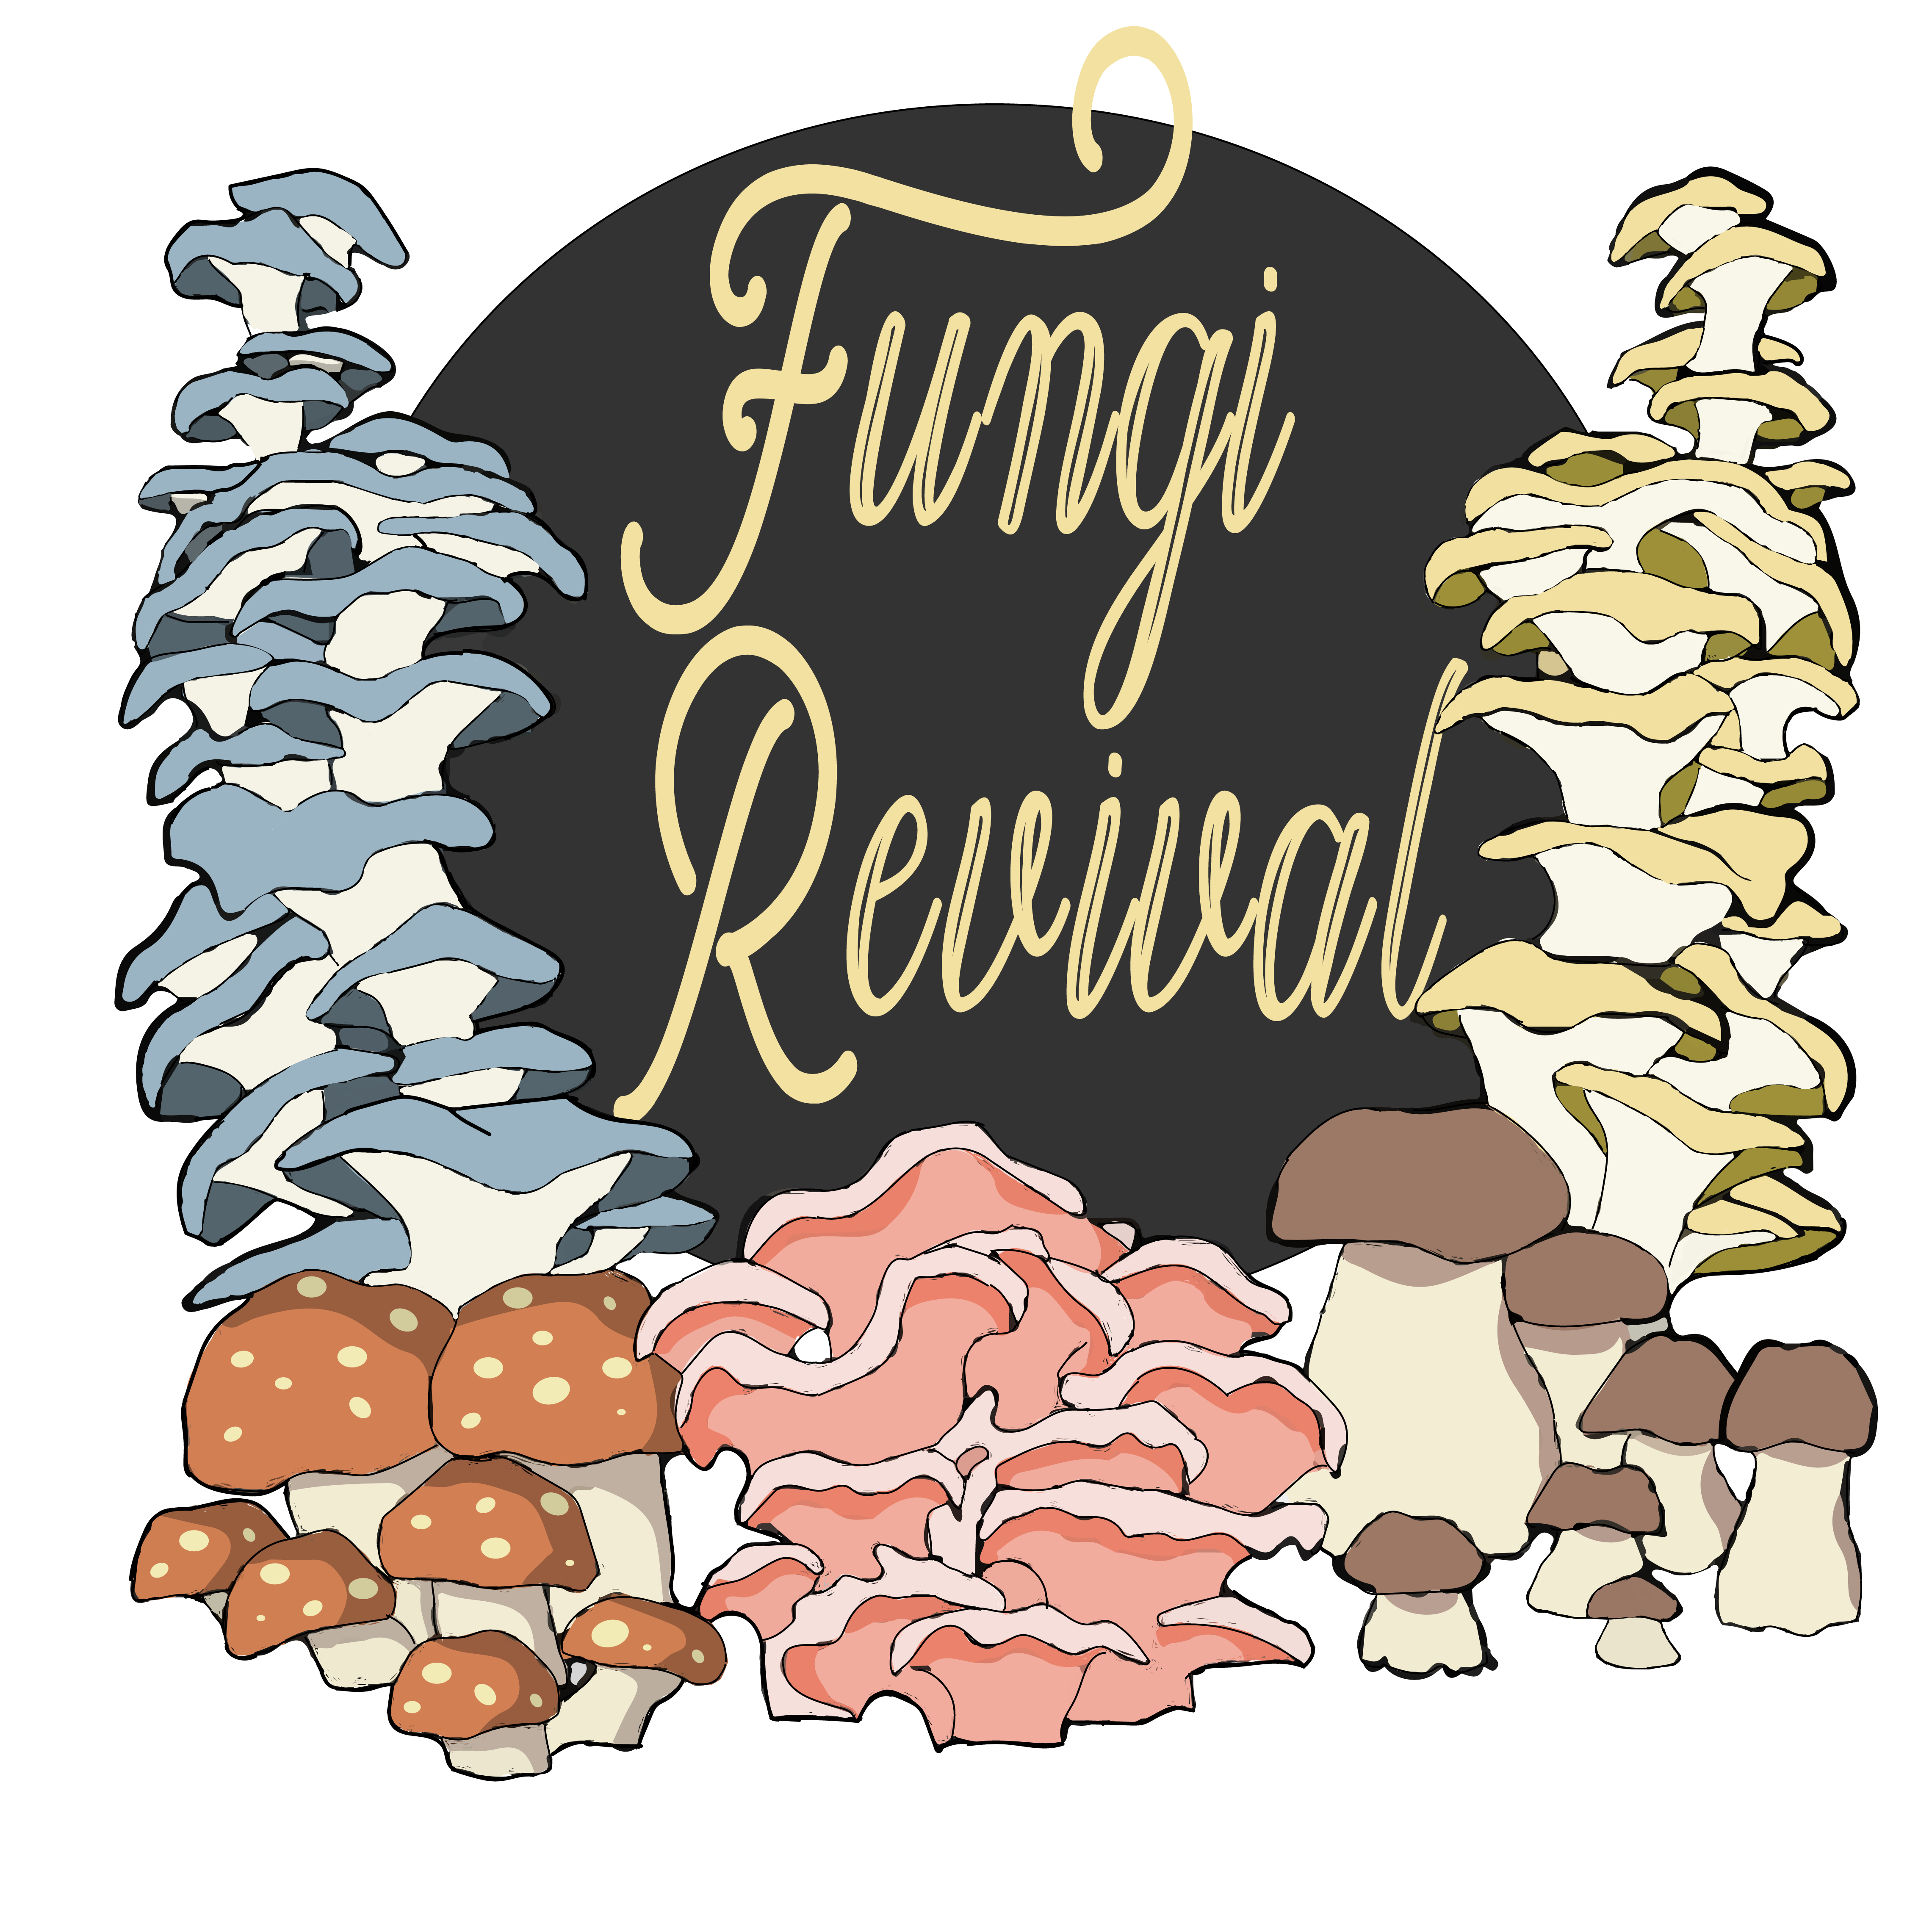 Fungi Revival